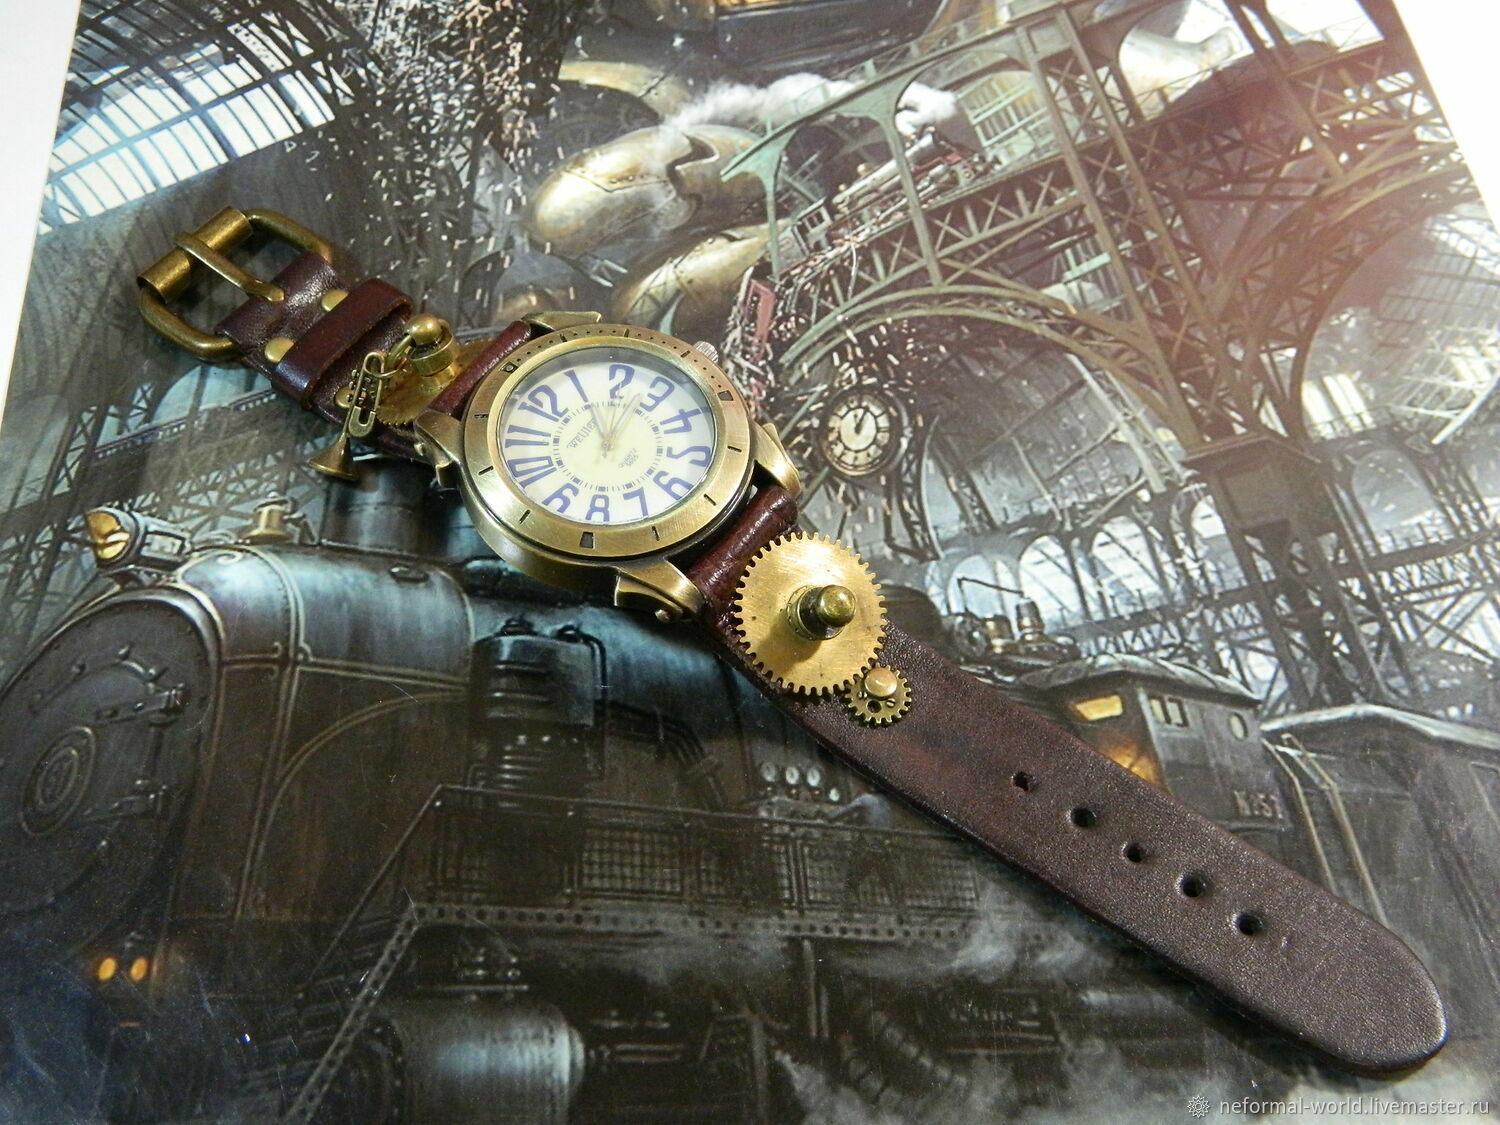 Steampunk wristwatch 'FUTURISM' quartz movement, Watches, Saratov,  Фото №1